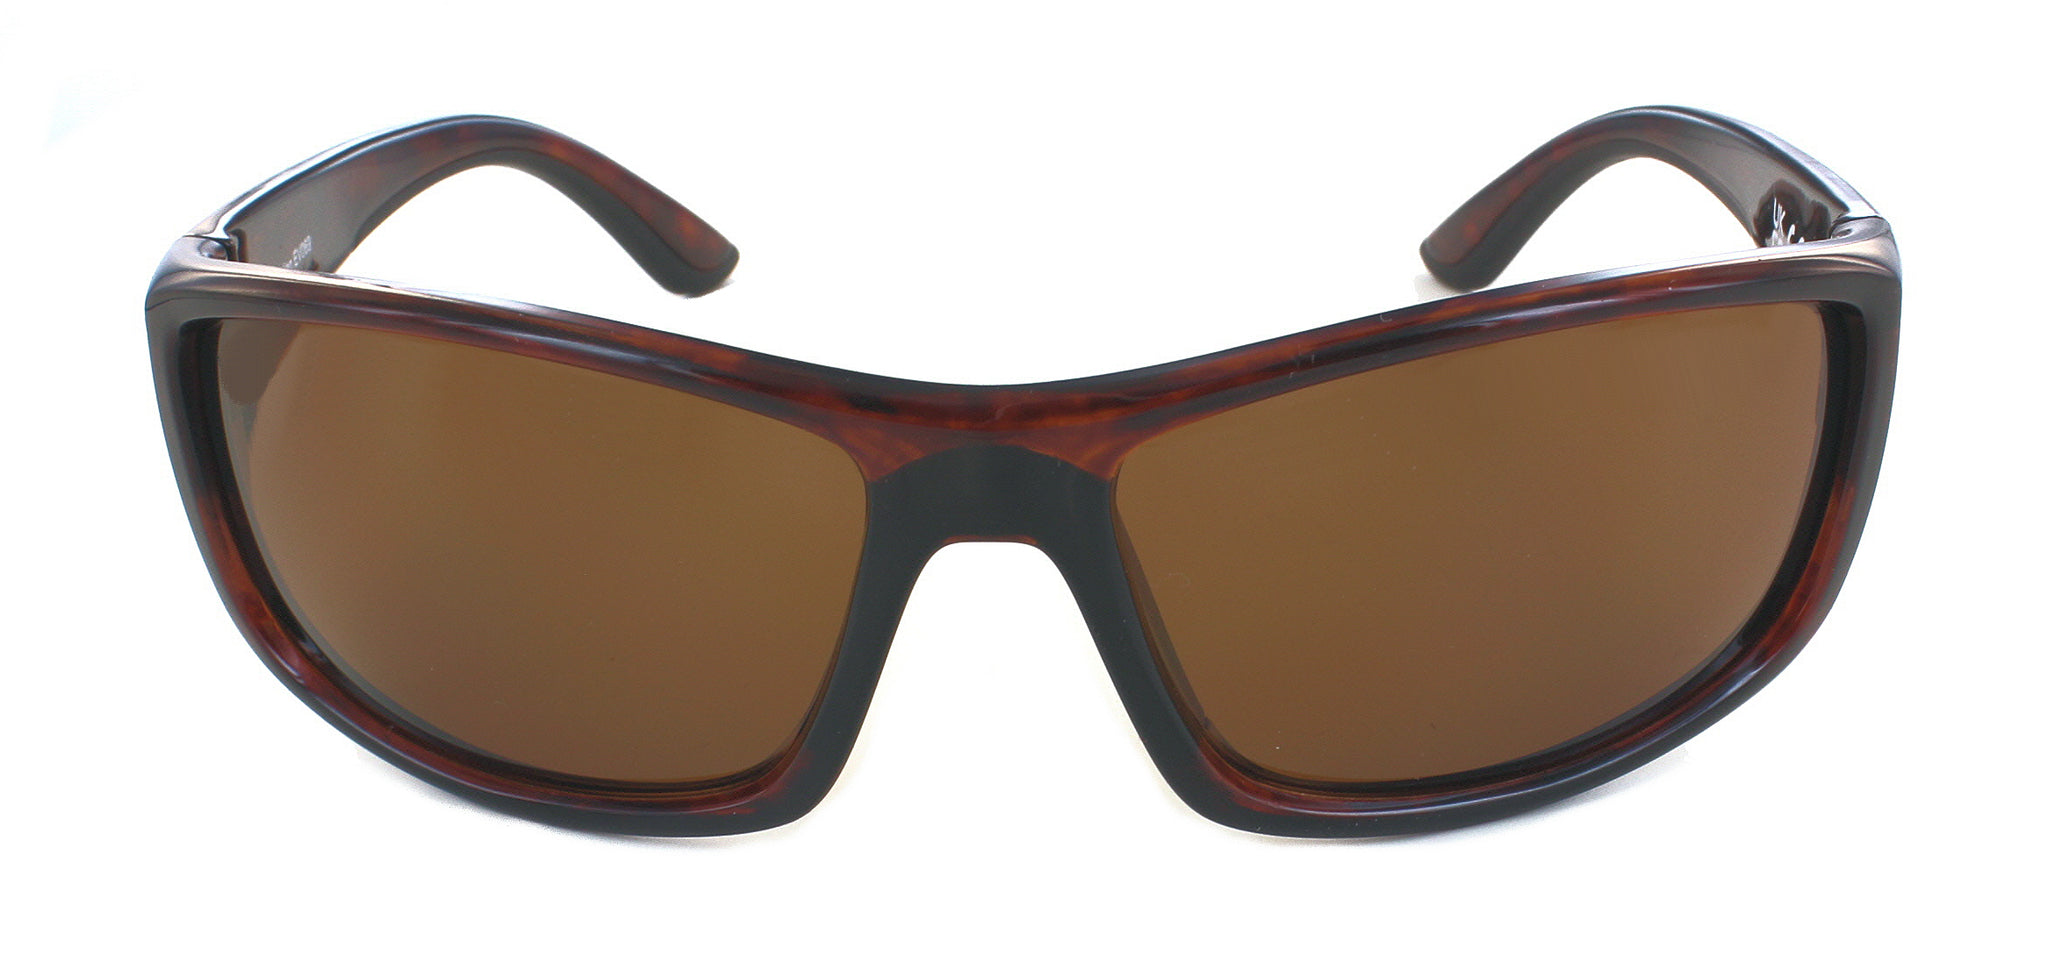 Evolution Rockport (Brown) - Polarized Fishing Sunglasses – Just